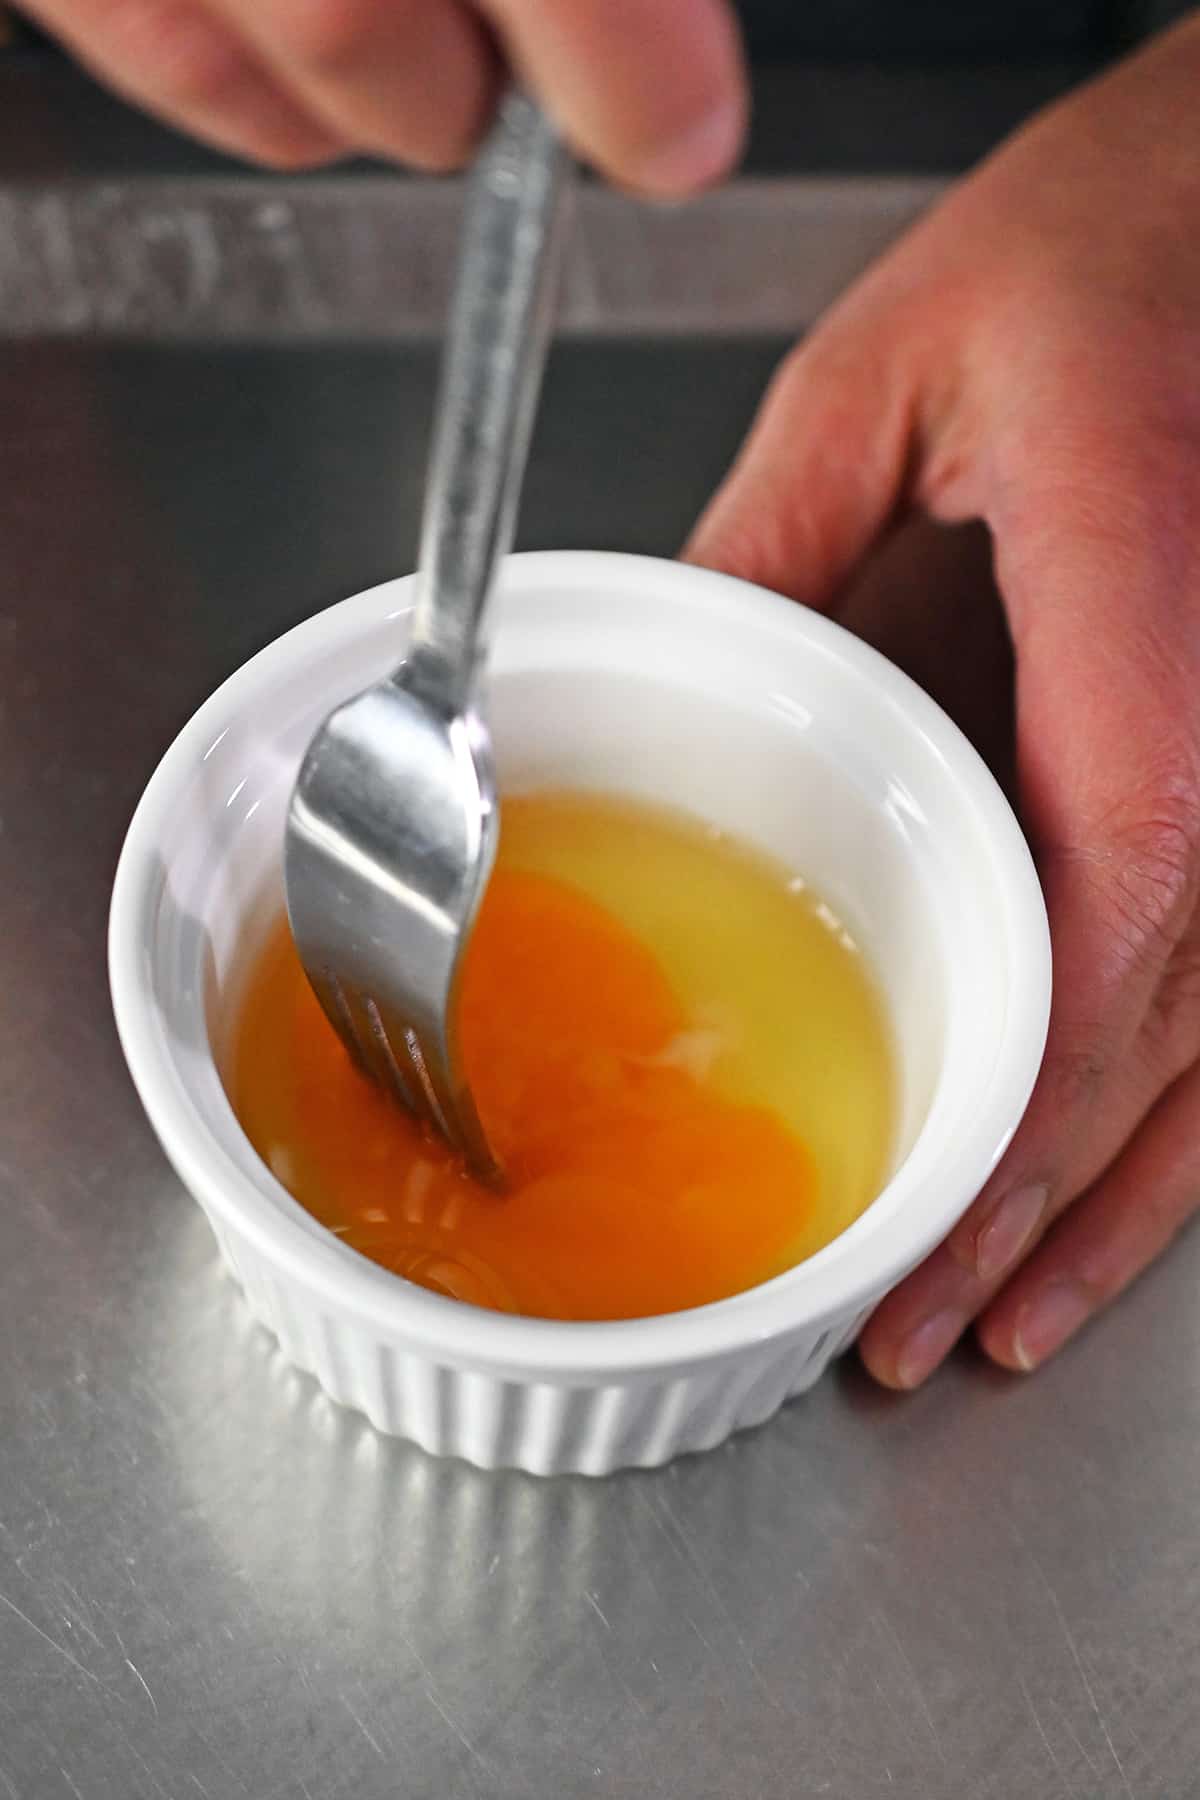 A closeup of a fork piercing the yolk of a raw egg in a white ramekin.